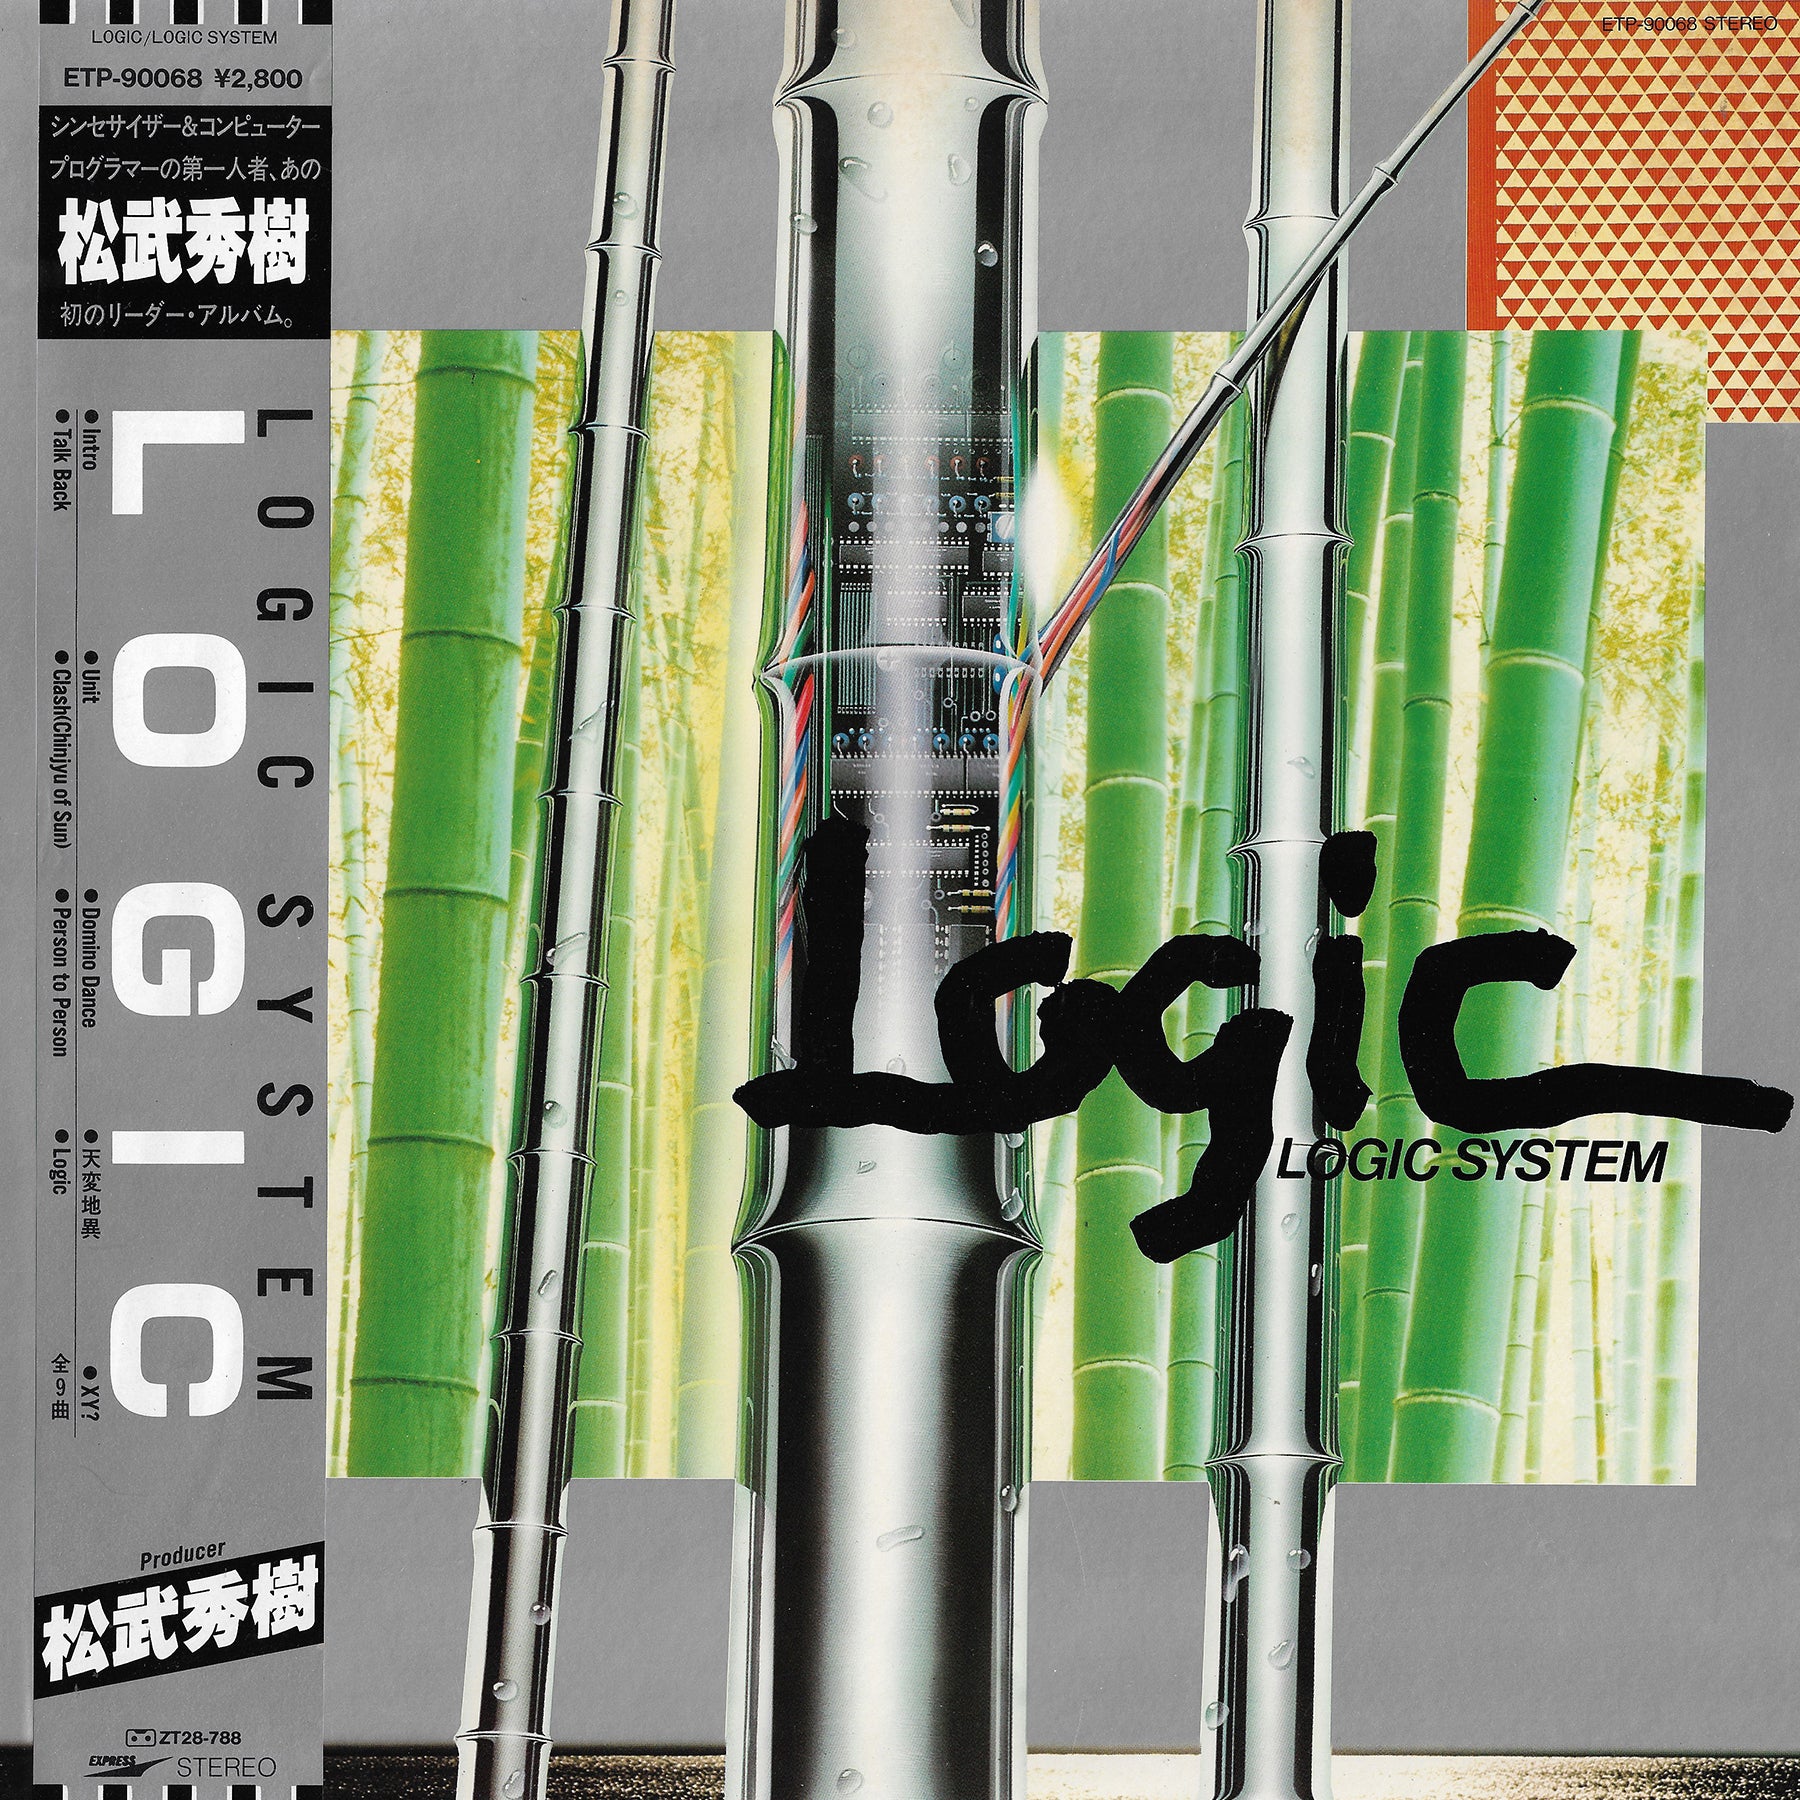 Logic System - Logic